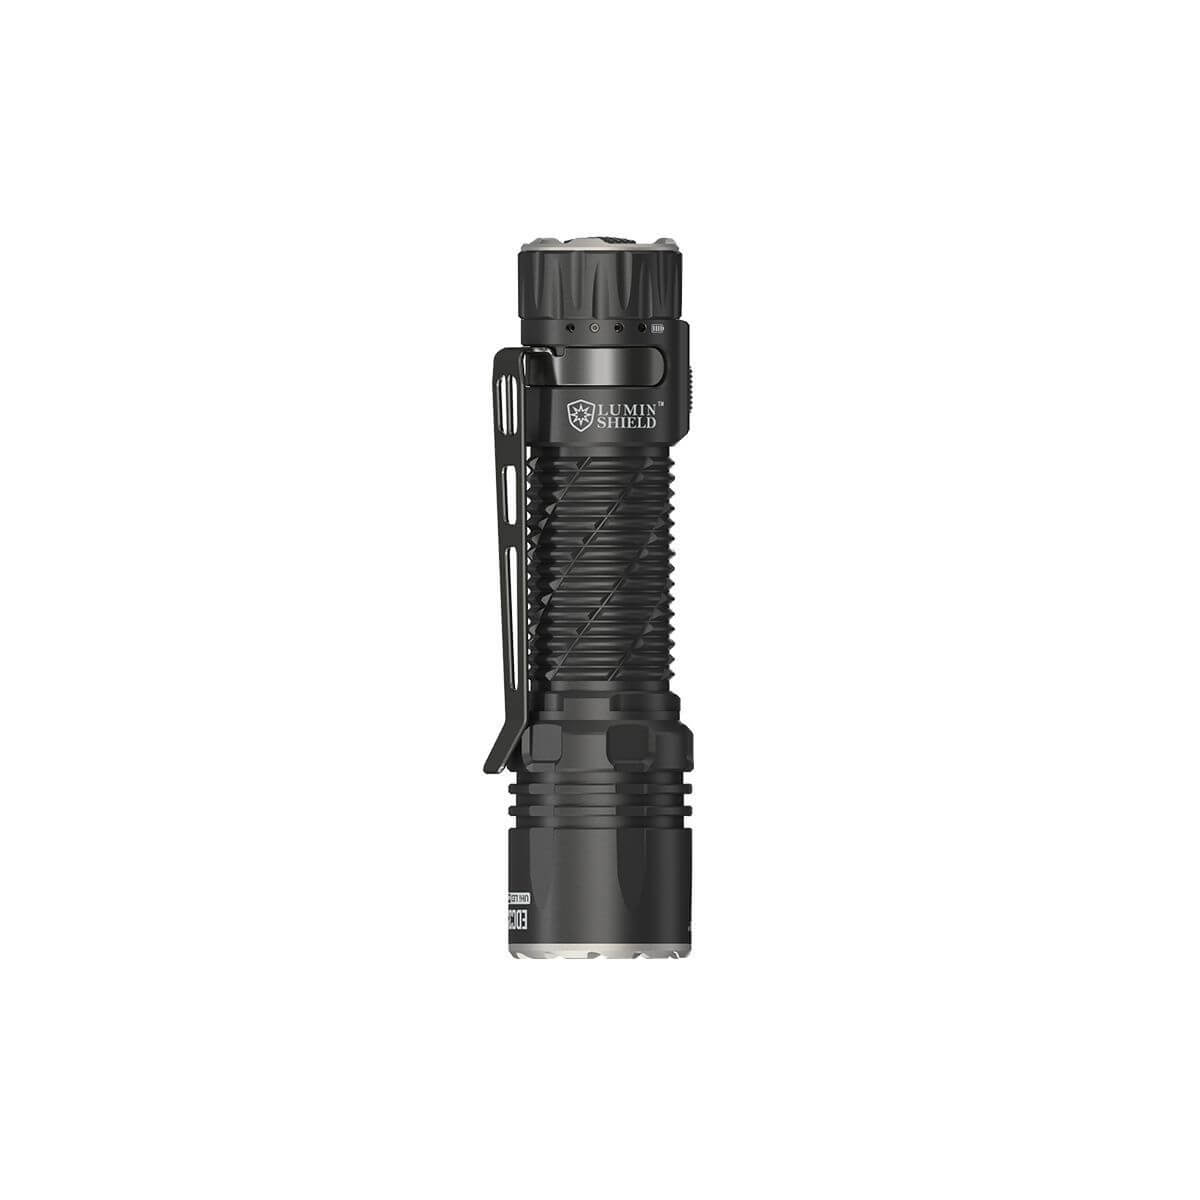 Pre-order Nitecore EDC35 5,000 Lumens Tactical EDC Flashlight